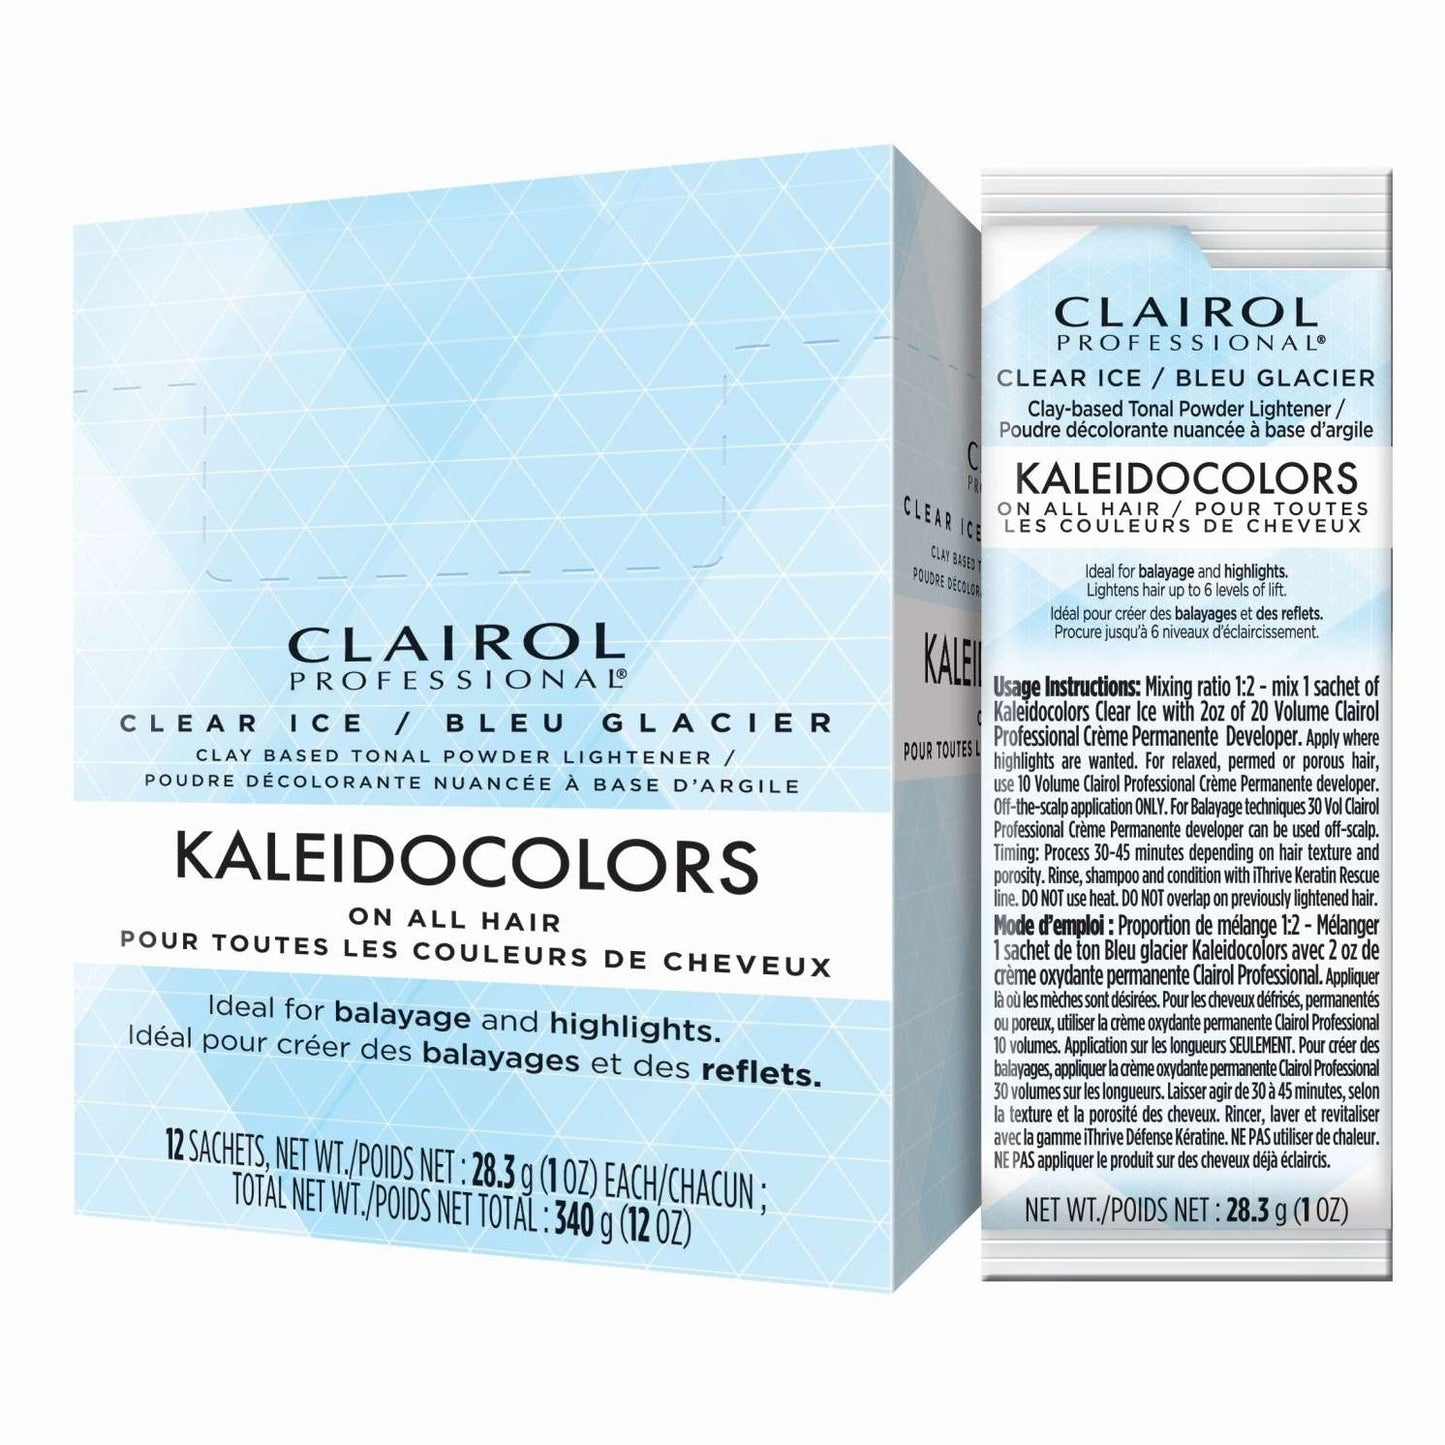 Clairol Professional Clear Ice Tonal Powder Lightner Kaleidocolors On All Hair